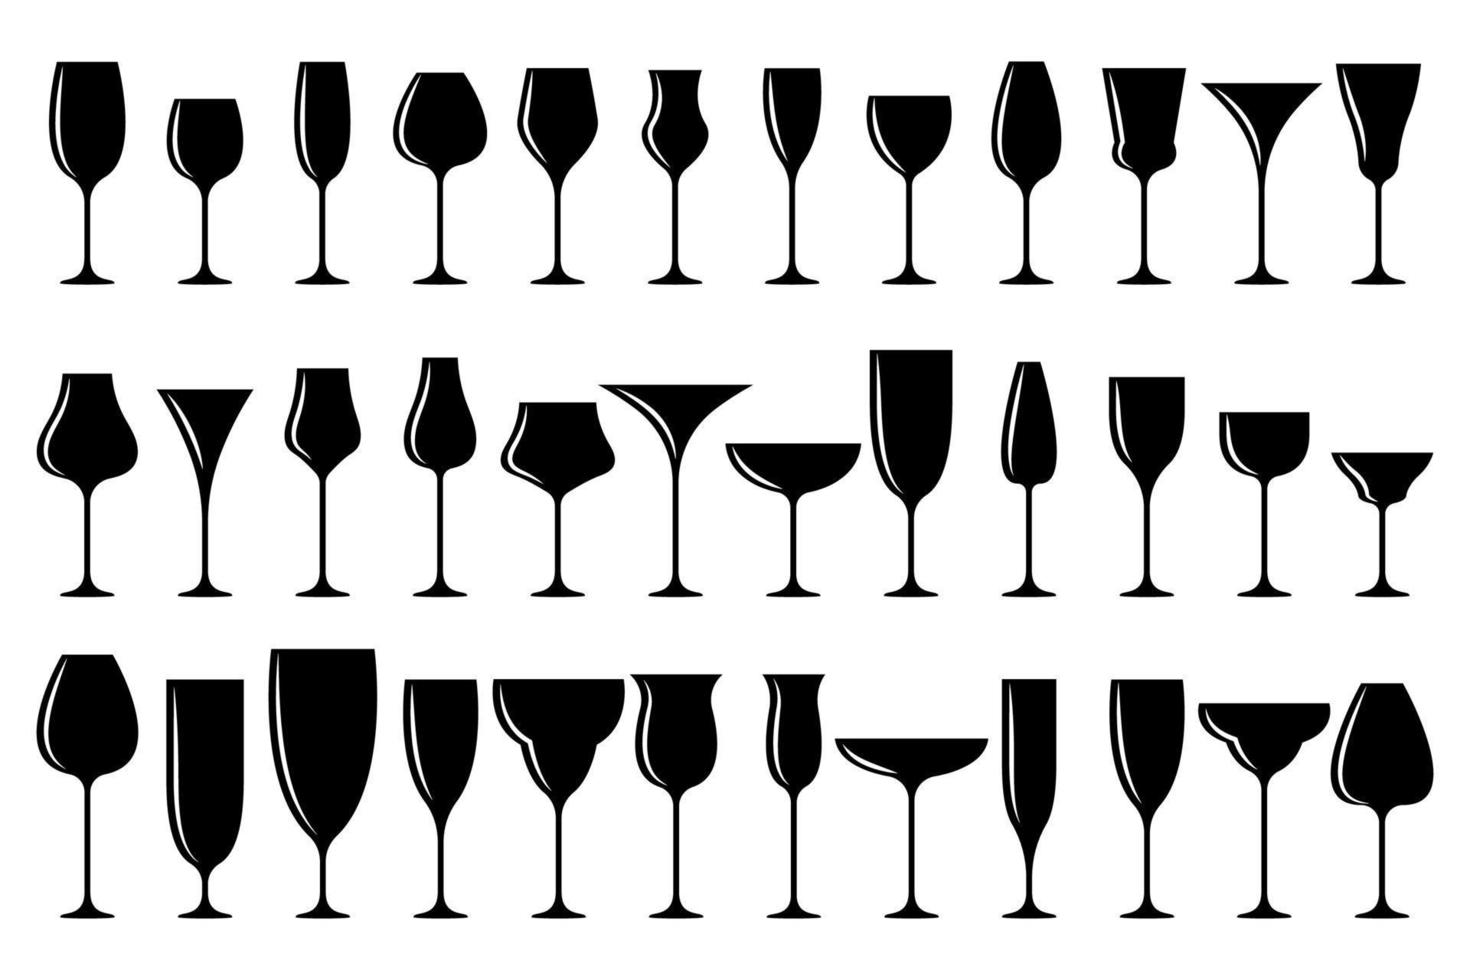 bebida ilustração de design vetorial de vidro isolada no fundo branco vetor